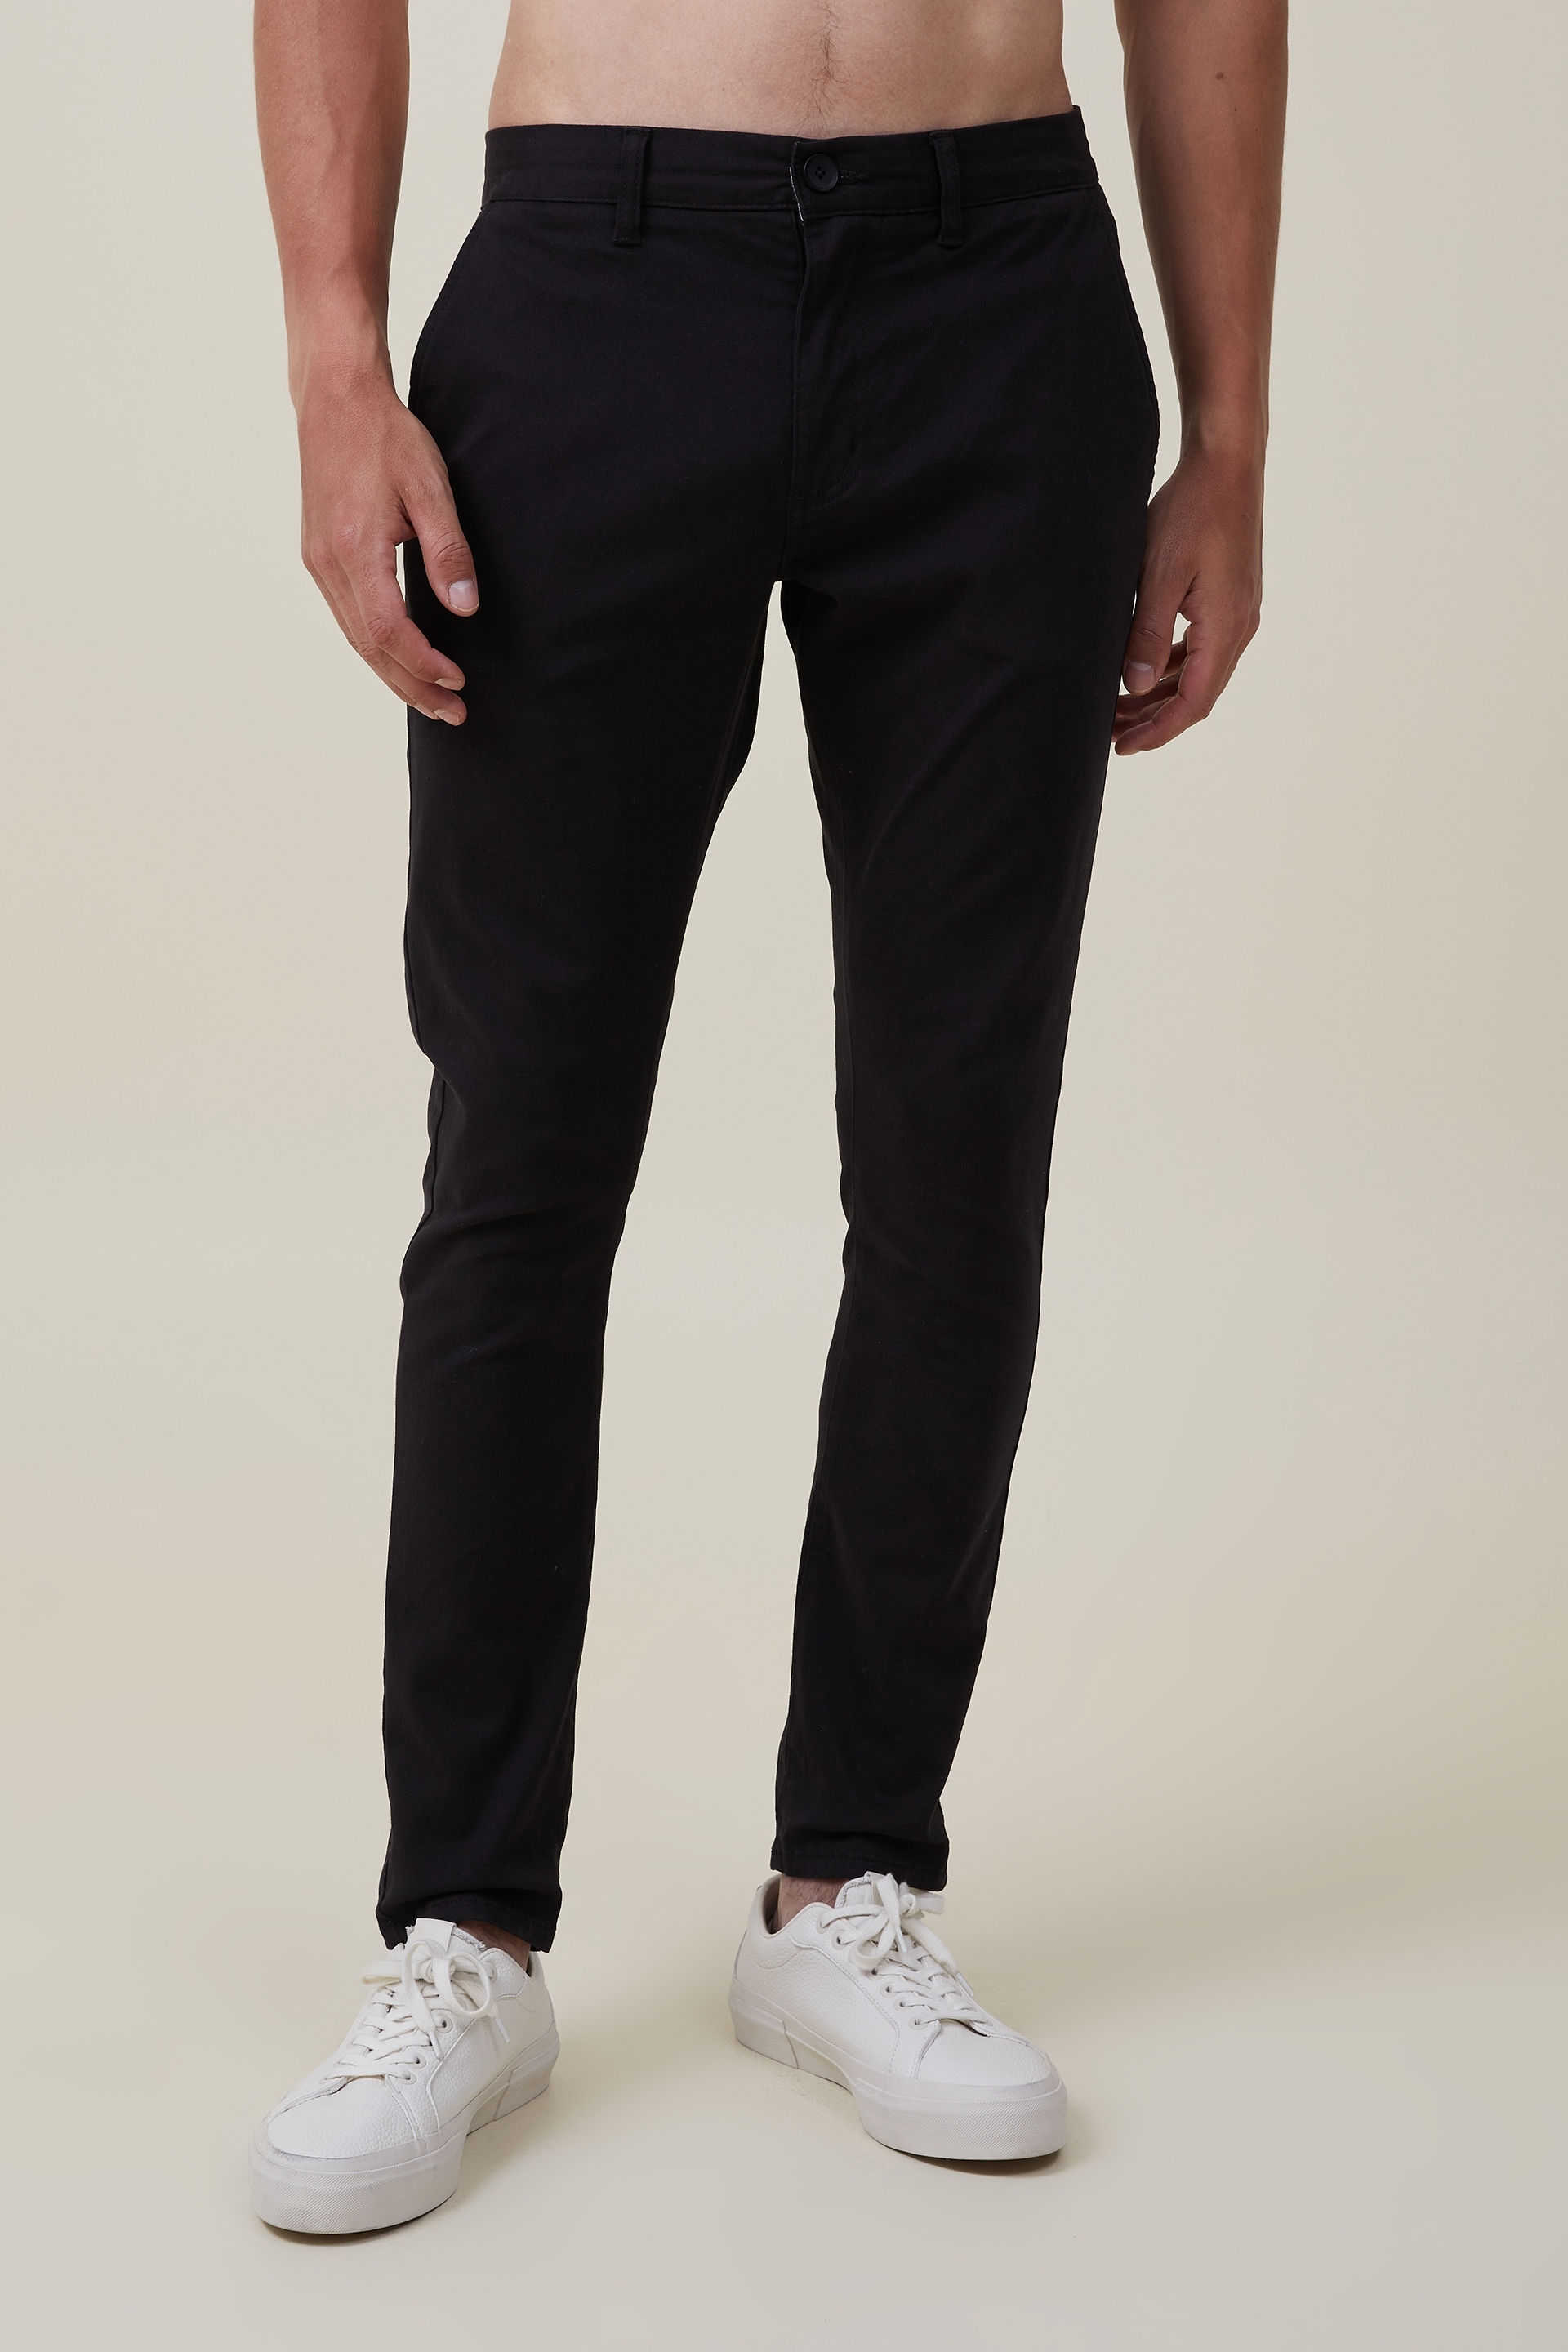 Buy Black Trousers  Pants for Men by STUDIO NEXX Online  Ajiocom